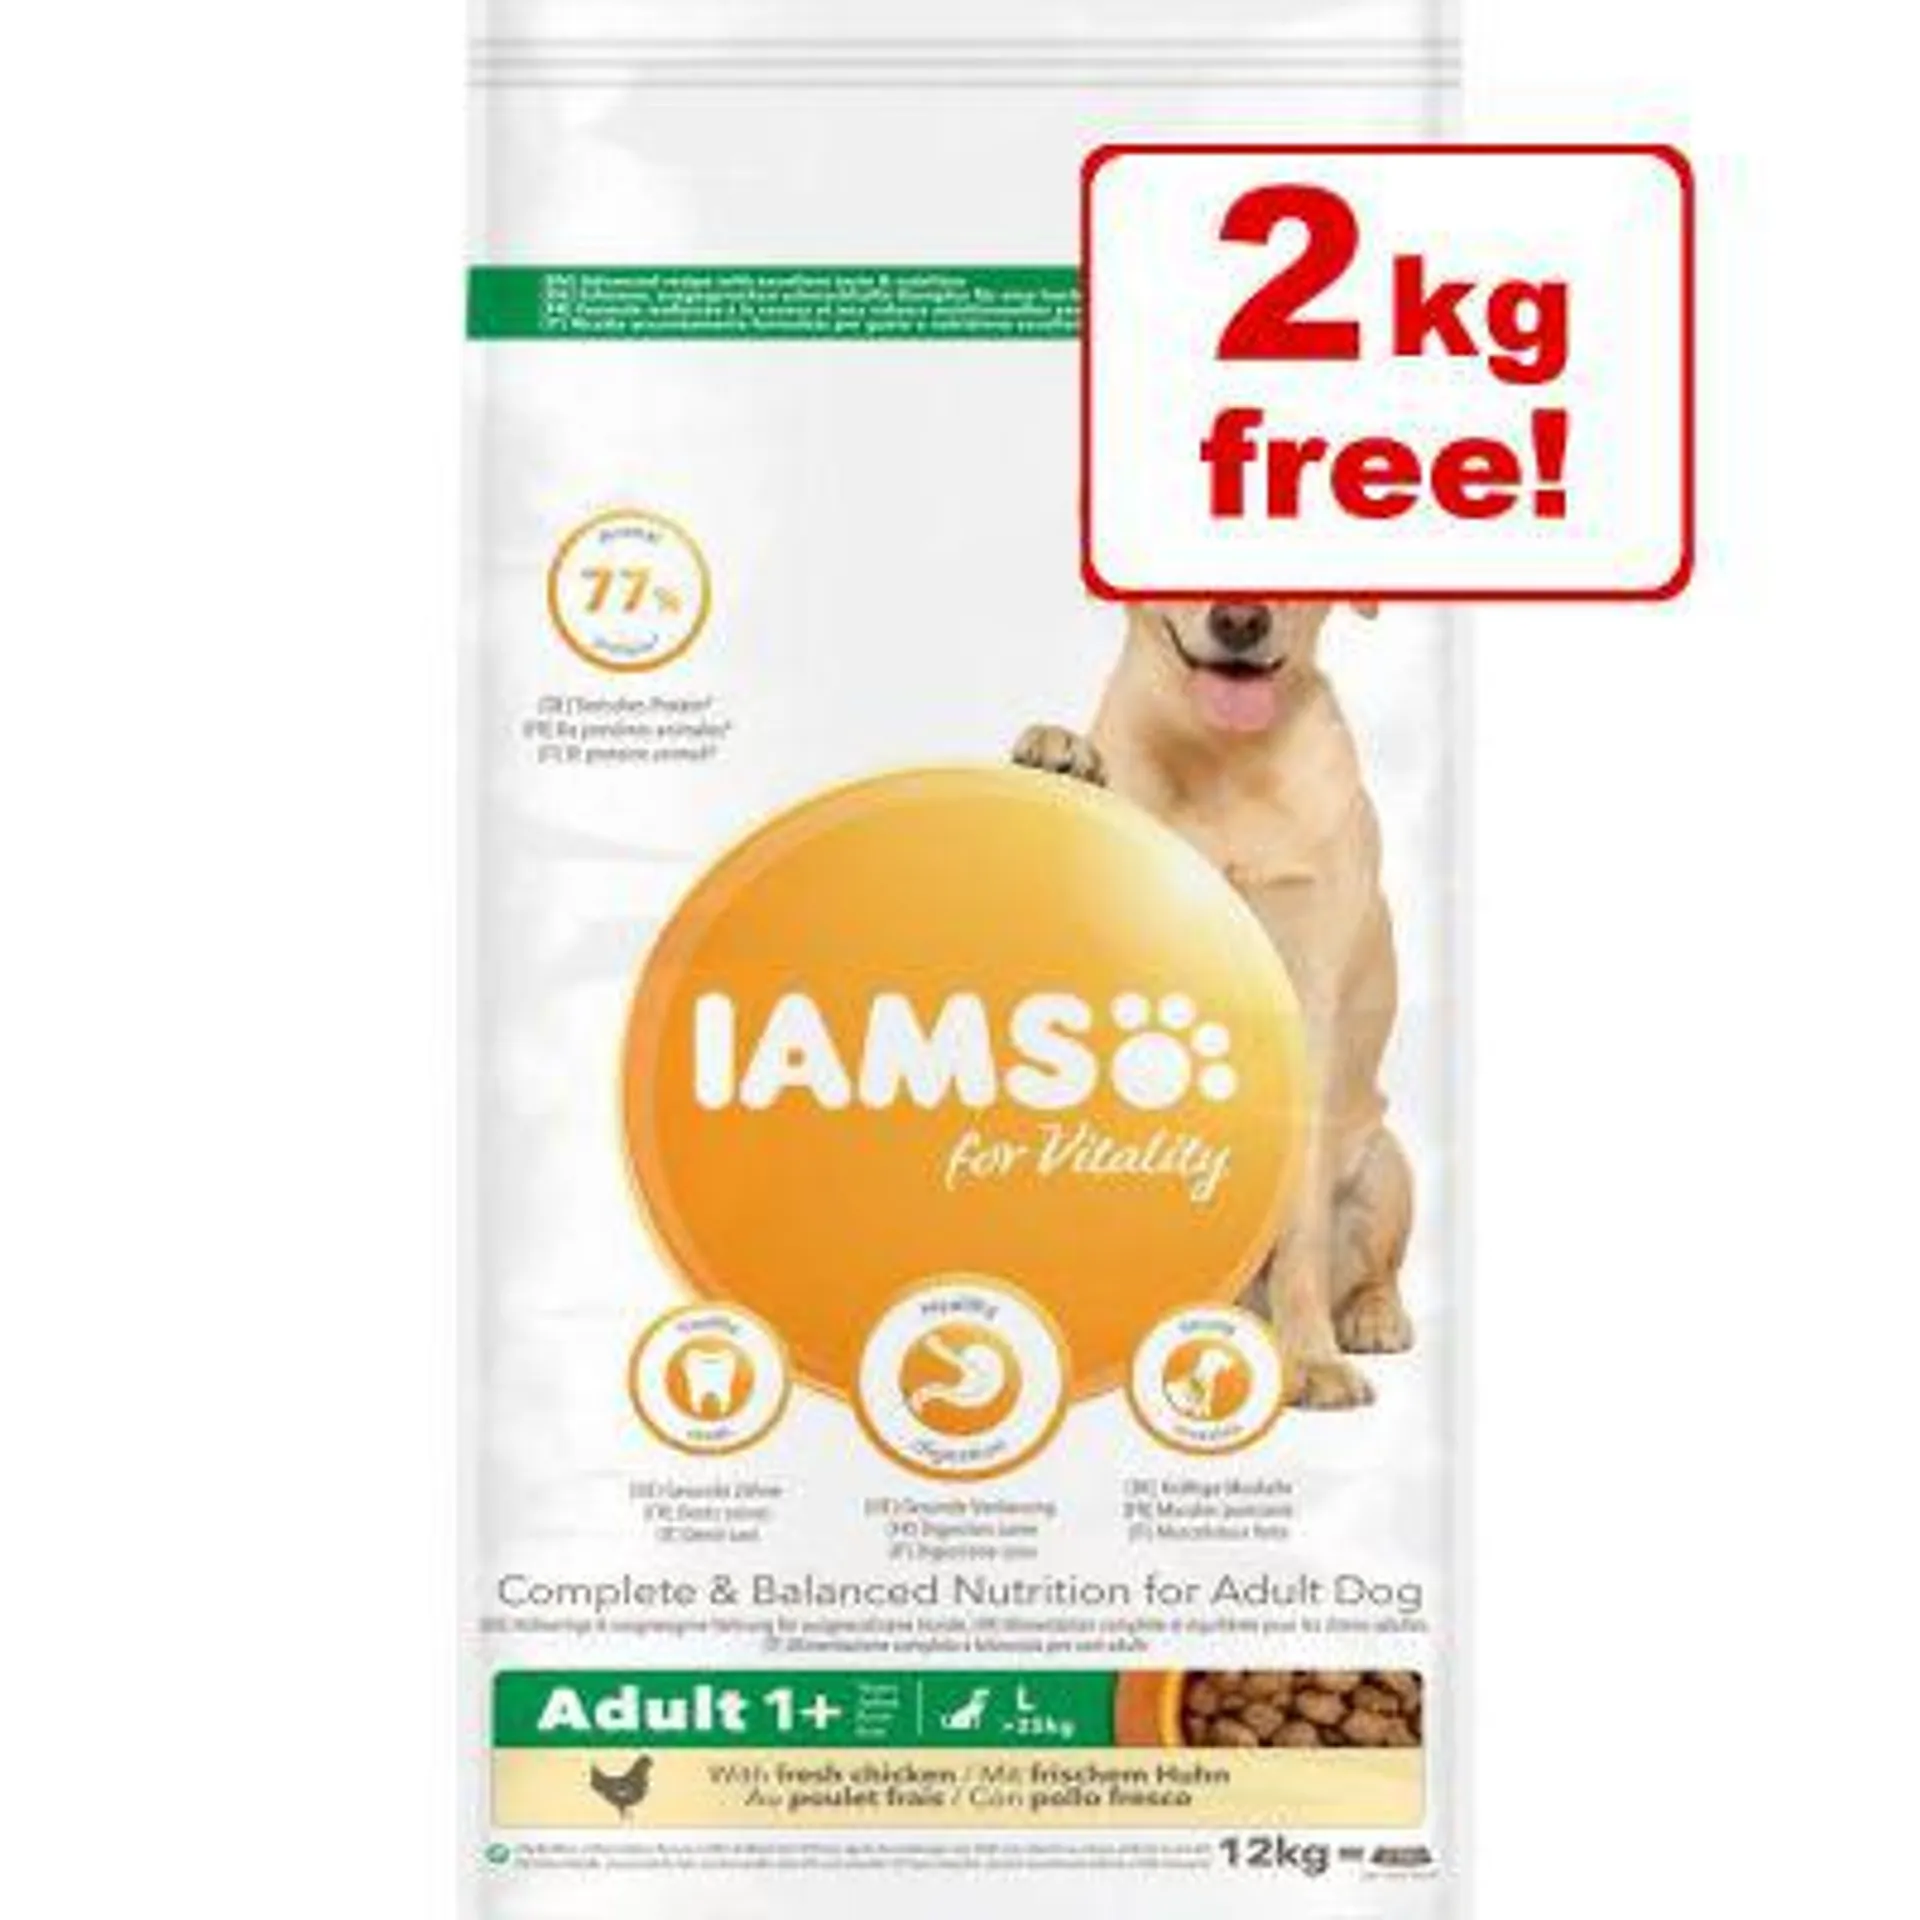 12kg IAMS Vitality Dry Dog Food - 10kg + 2kg Free!*